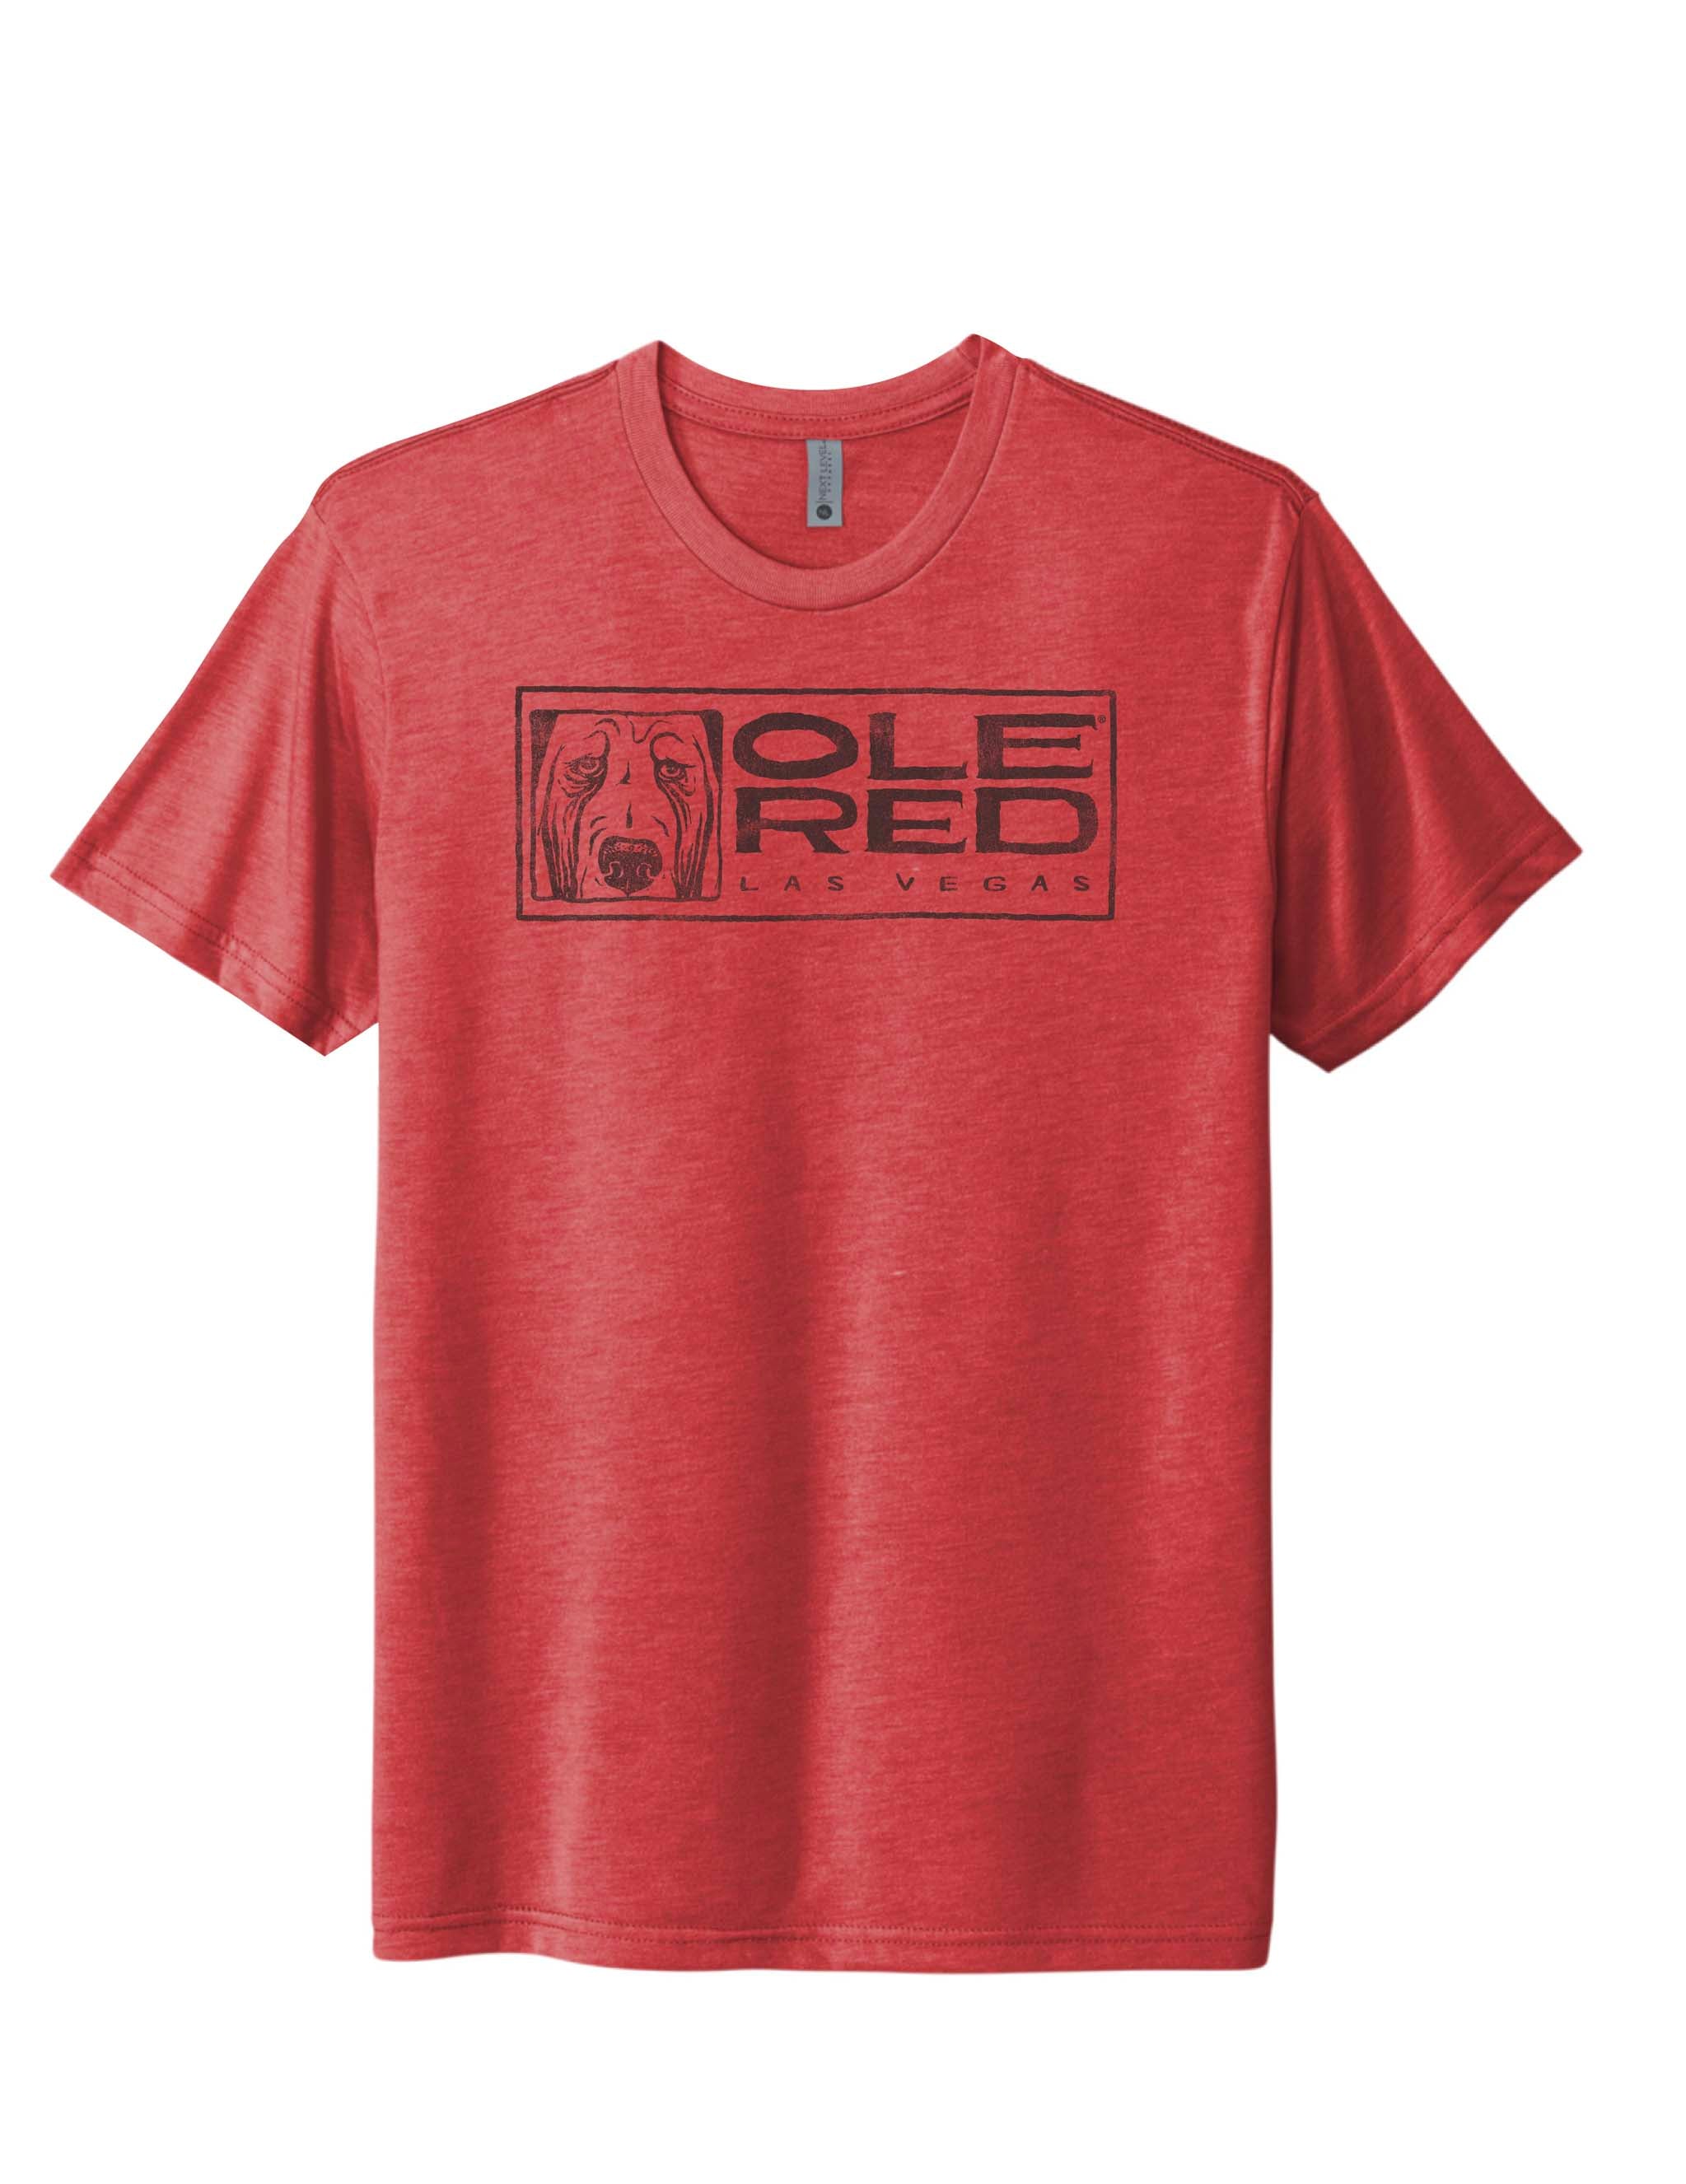 Ole Red Gatlinburg Southern Drawl Women's T-Shirt